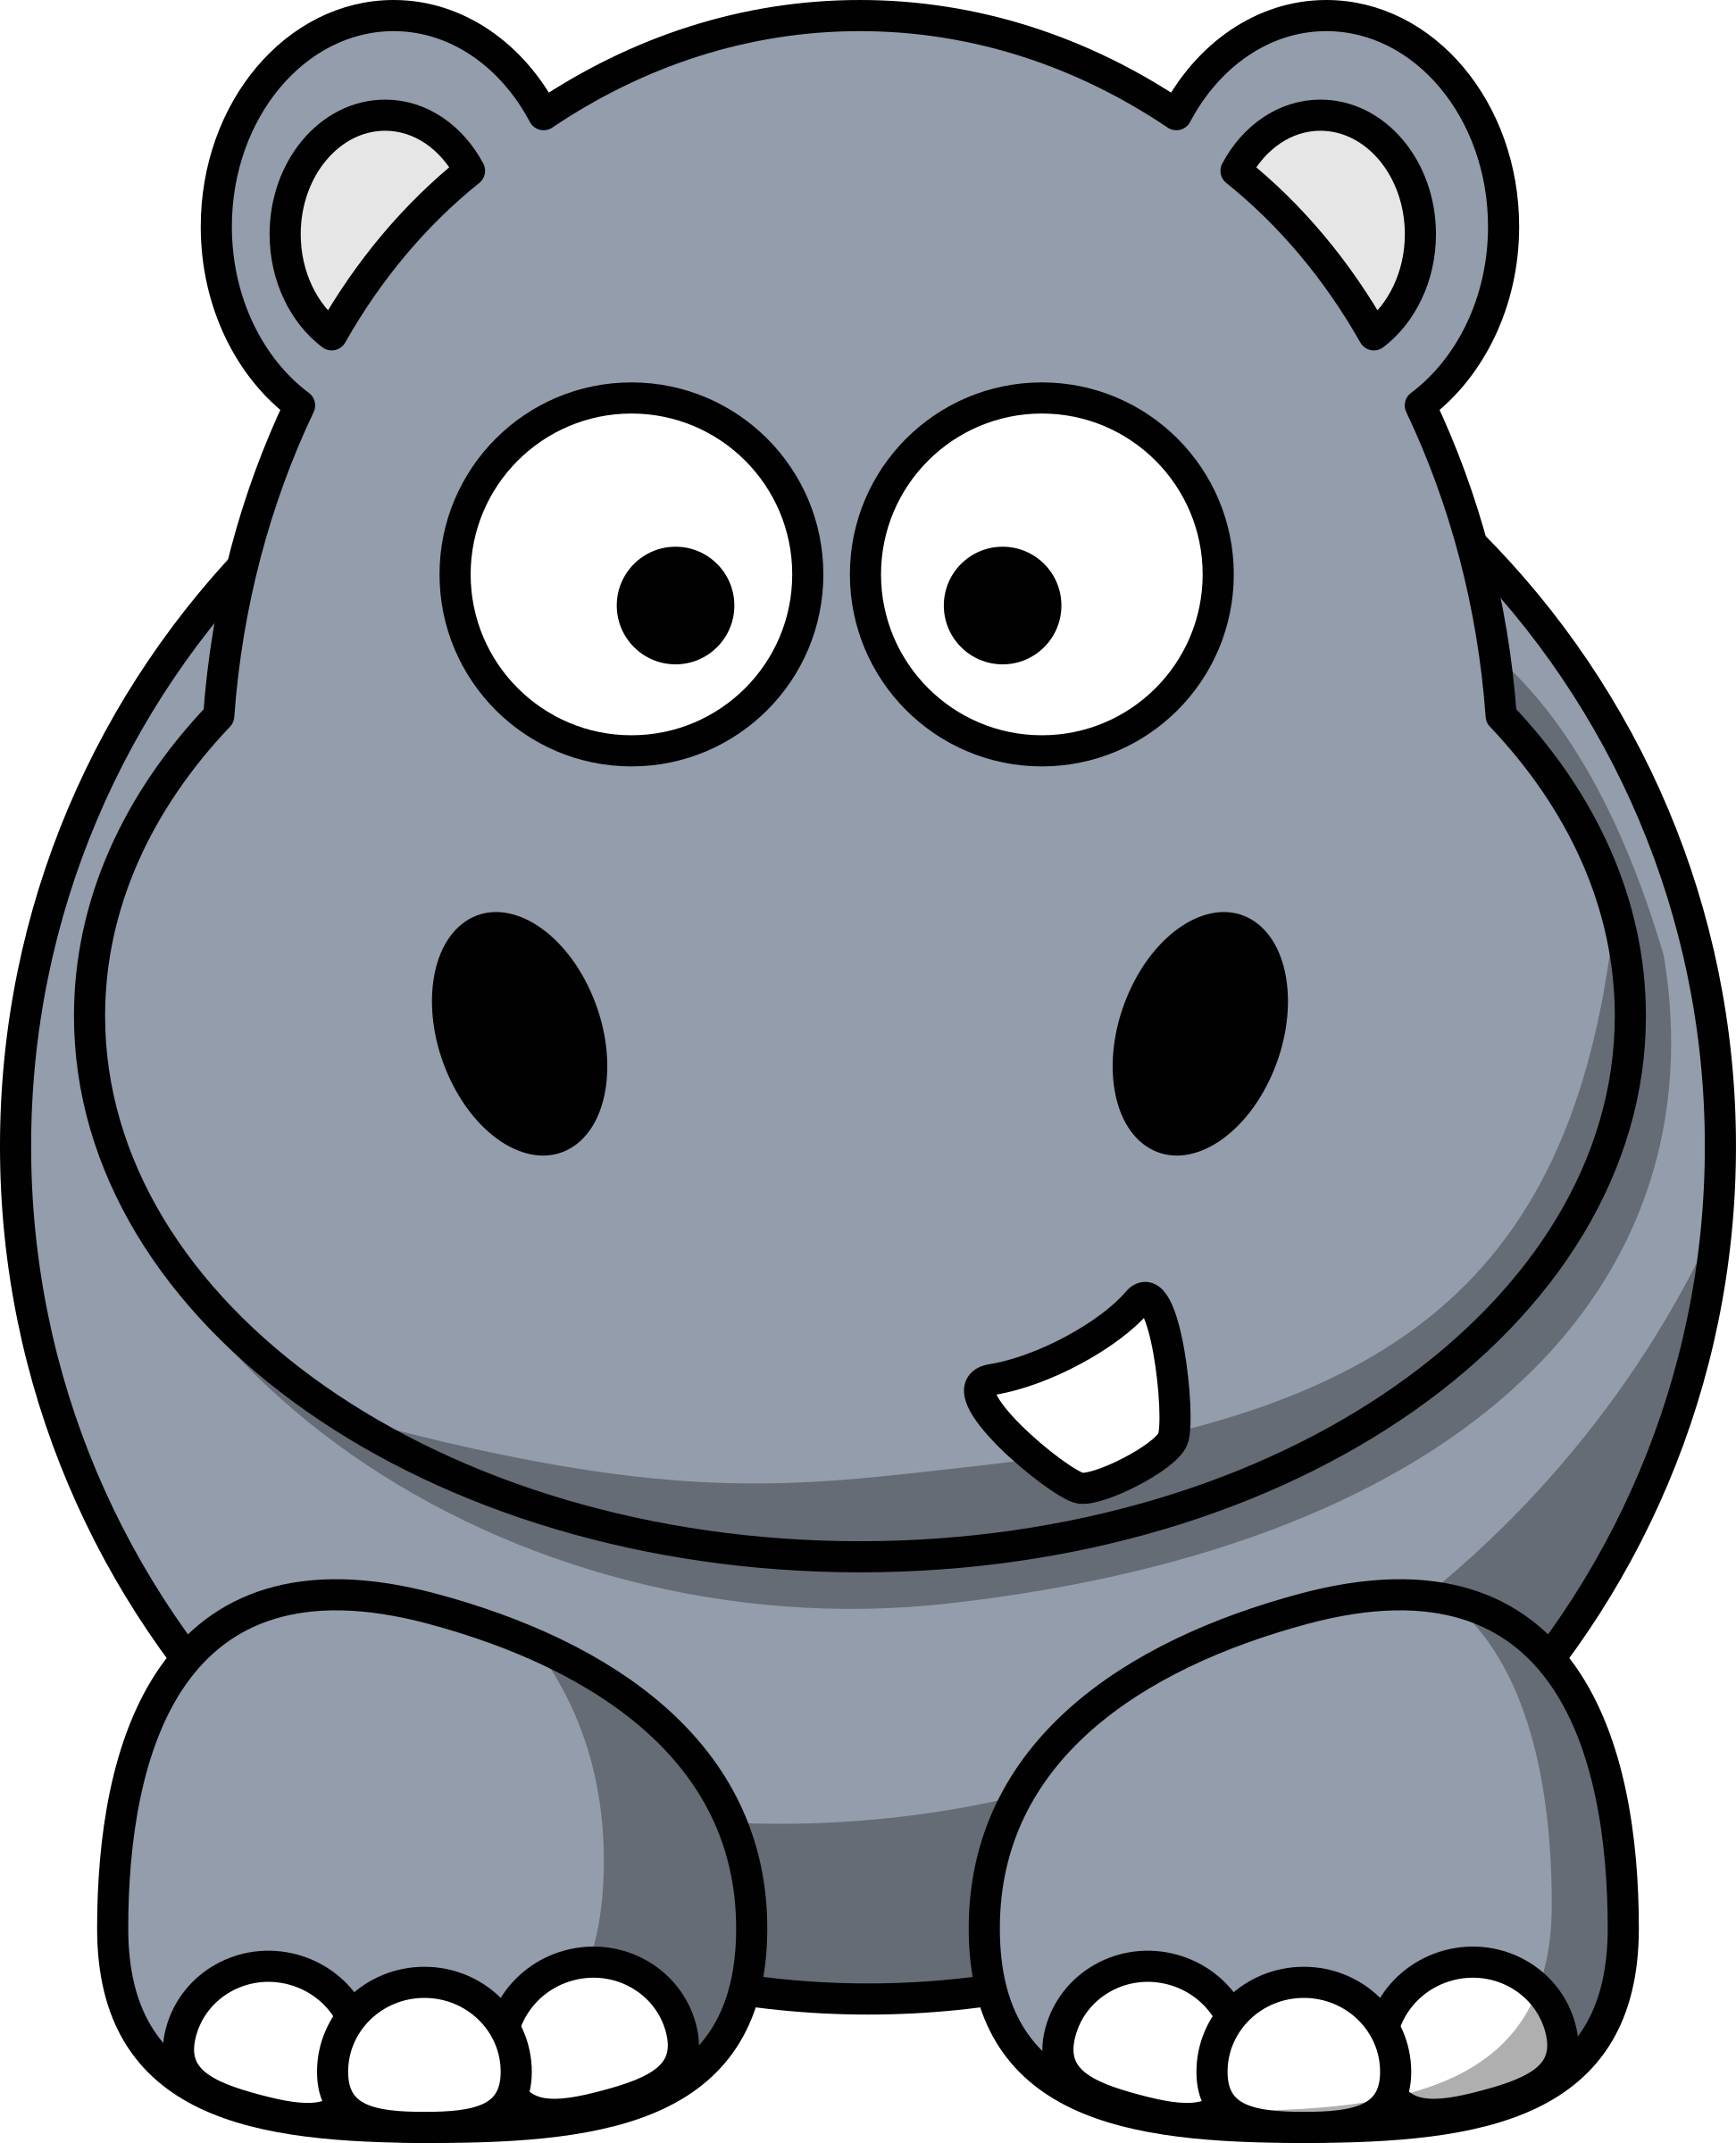 Free Cartoon Animals Png, Download Free Cartoon Animals Png png images,  Free ClipArts on Clipart Library